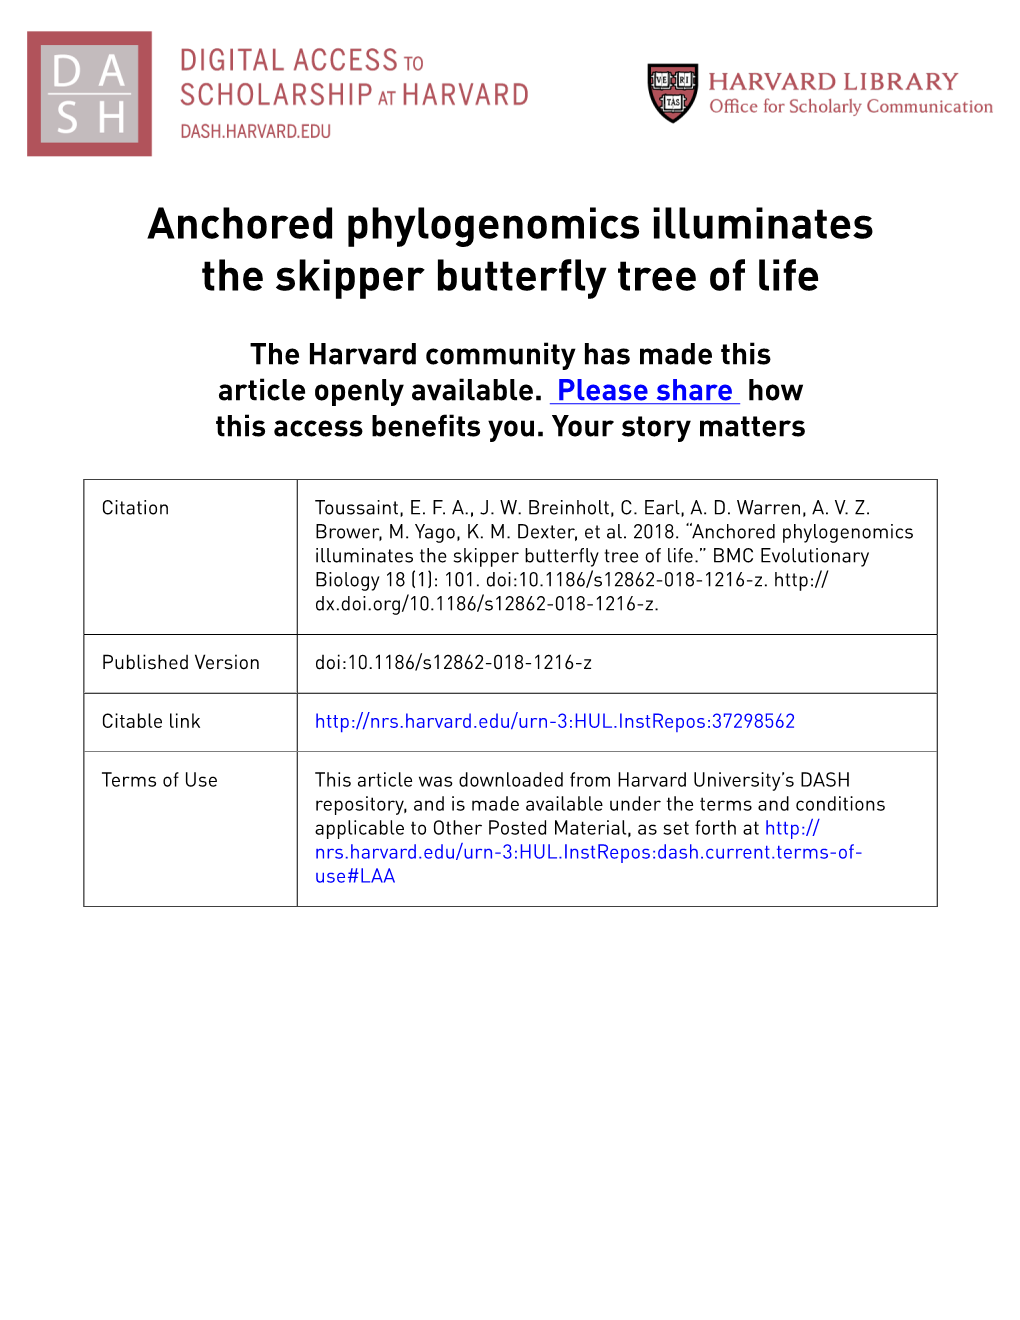 Anchored Phylogenomics Illuminates the Skipper Butterfly Tree of Life